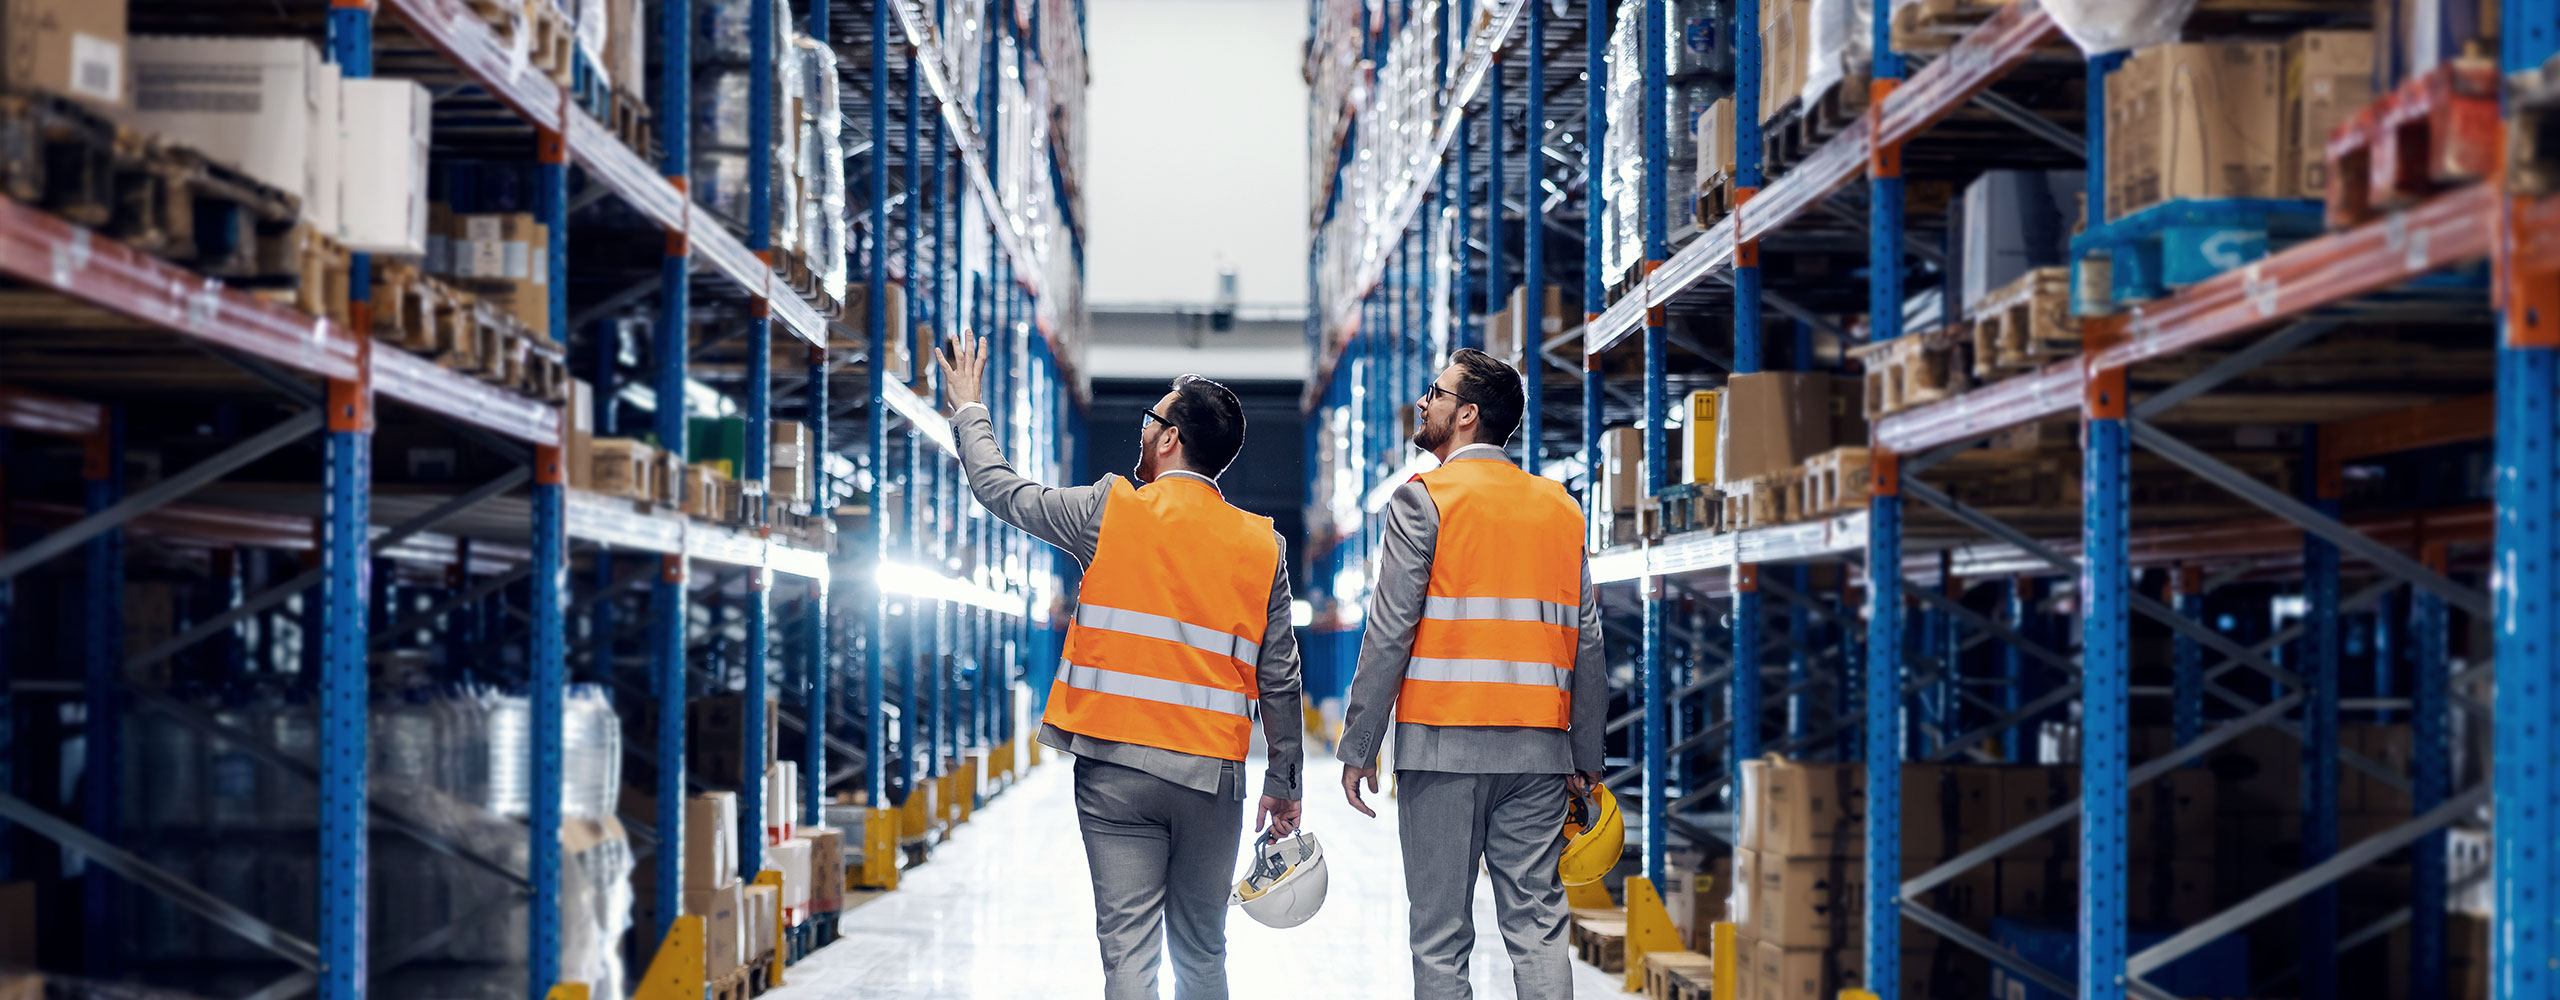 Two warehousing professionals walking through short and long-term storage racks